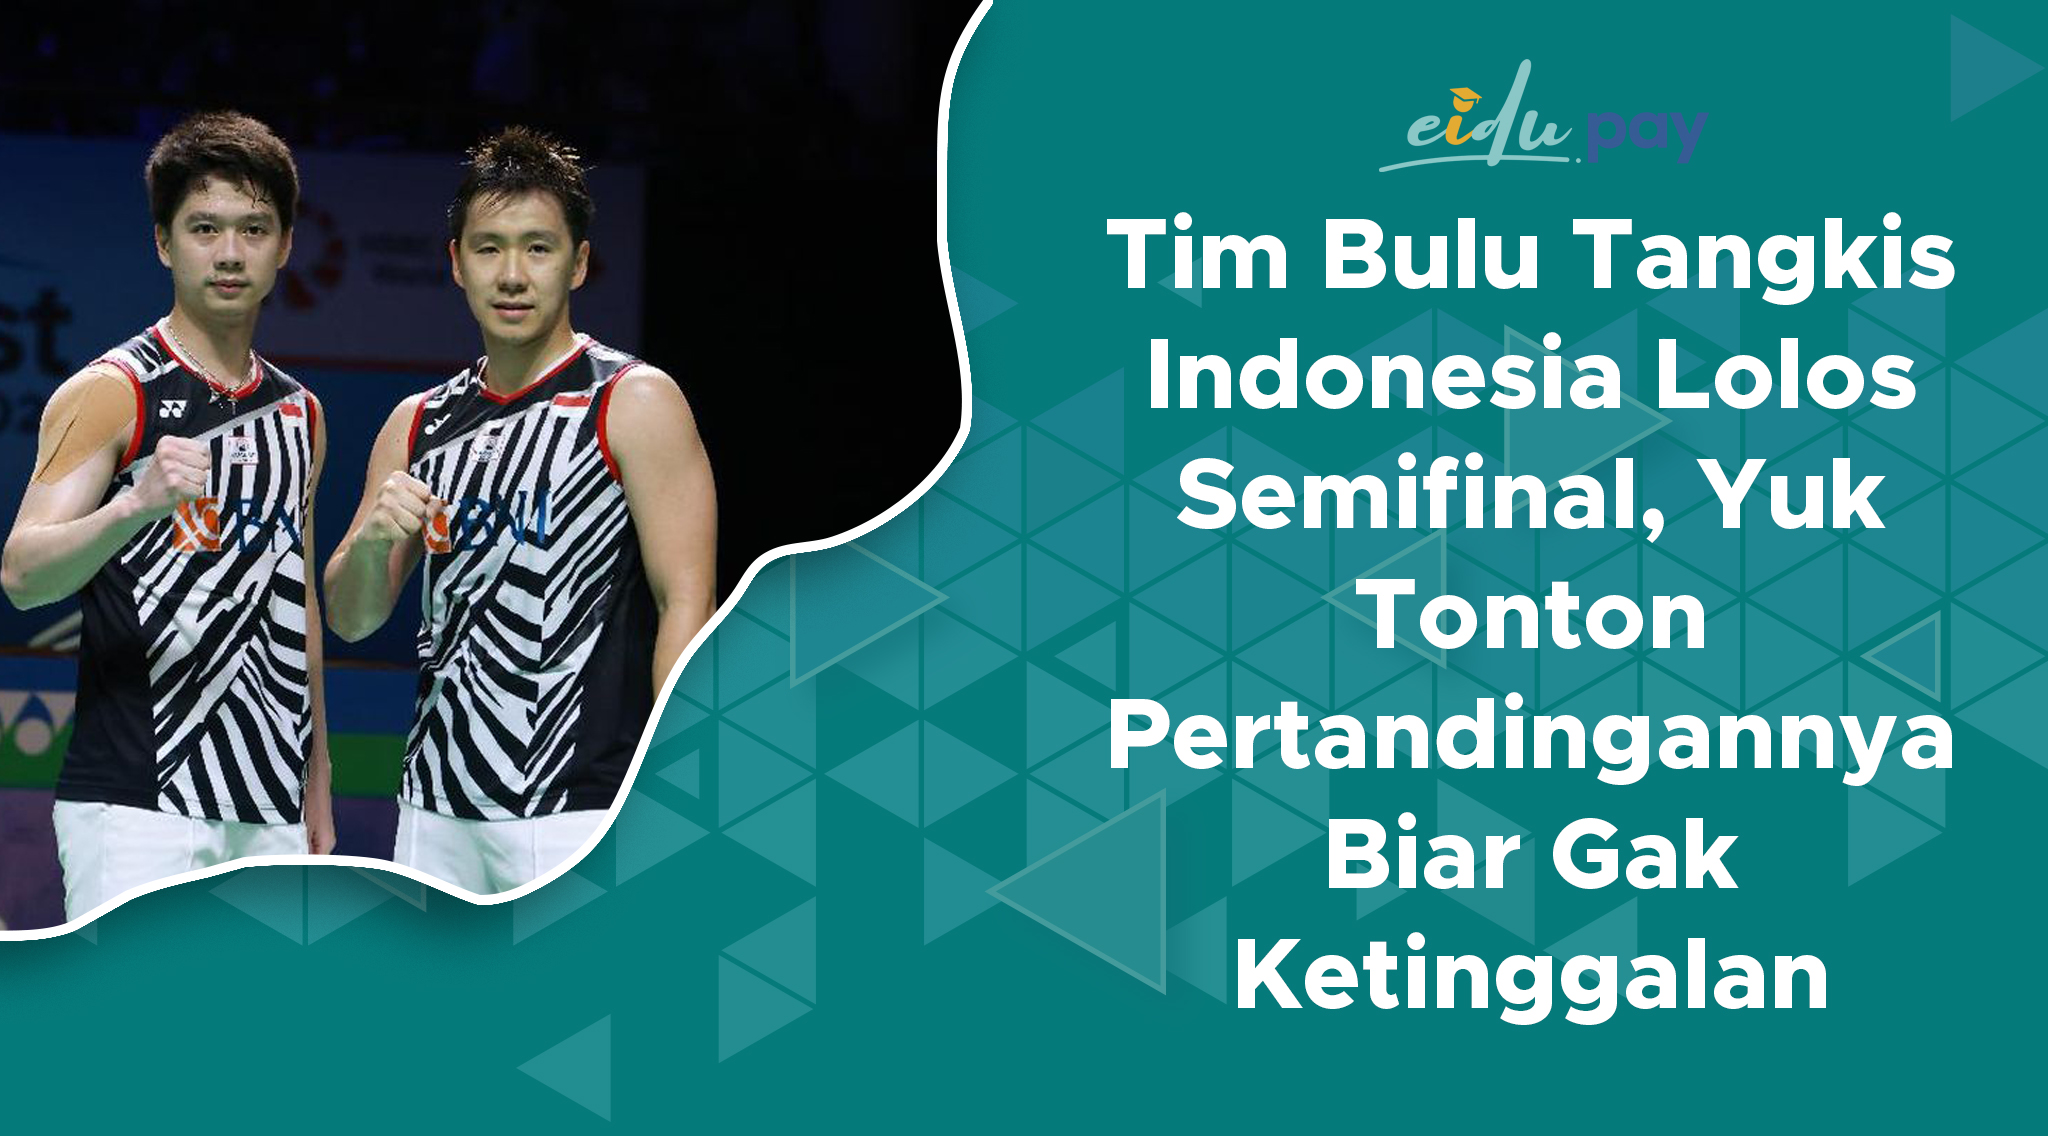 Tim Bulu Tangkis Indonesia Lolos Semifinal, Yuk Tonton Pertandingannya Biar Gak Ketinggalan